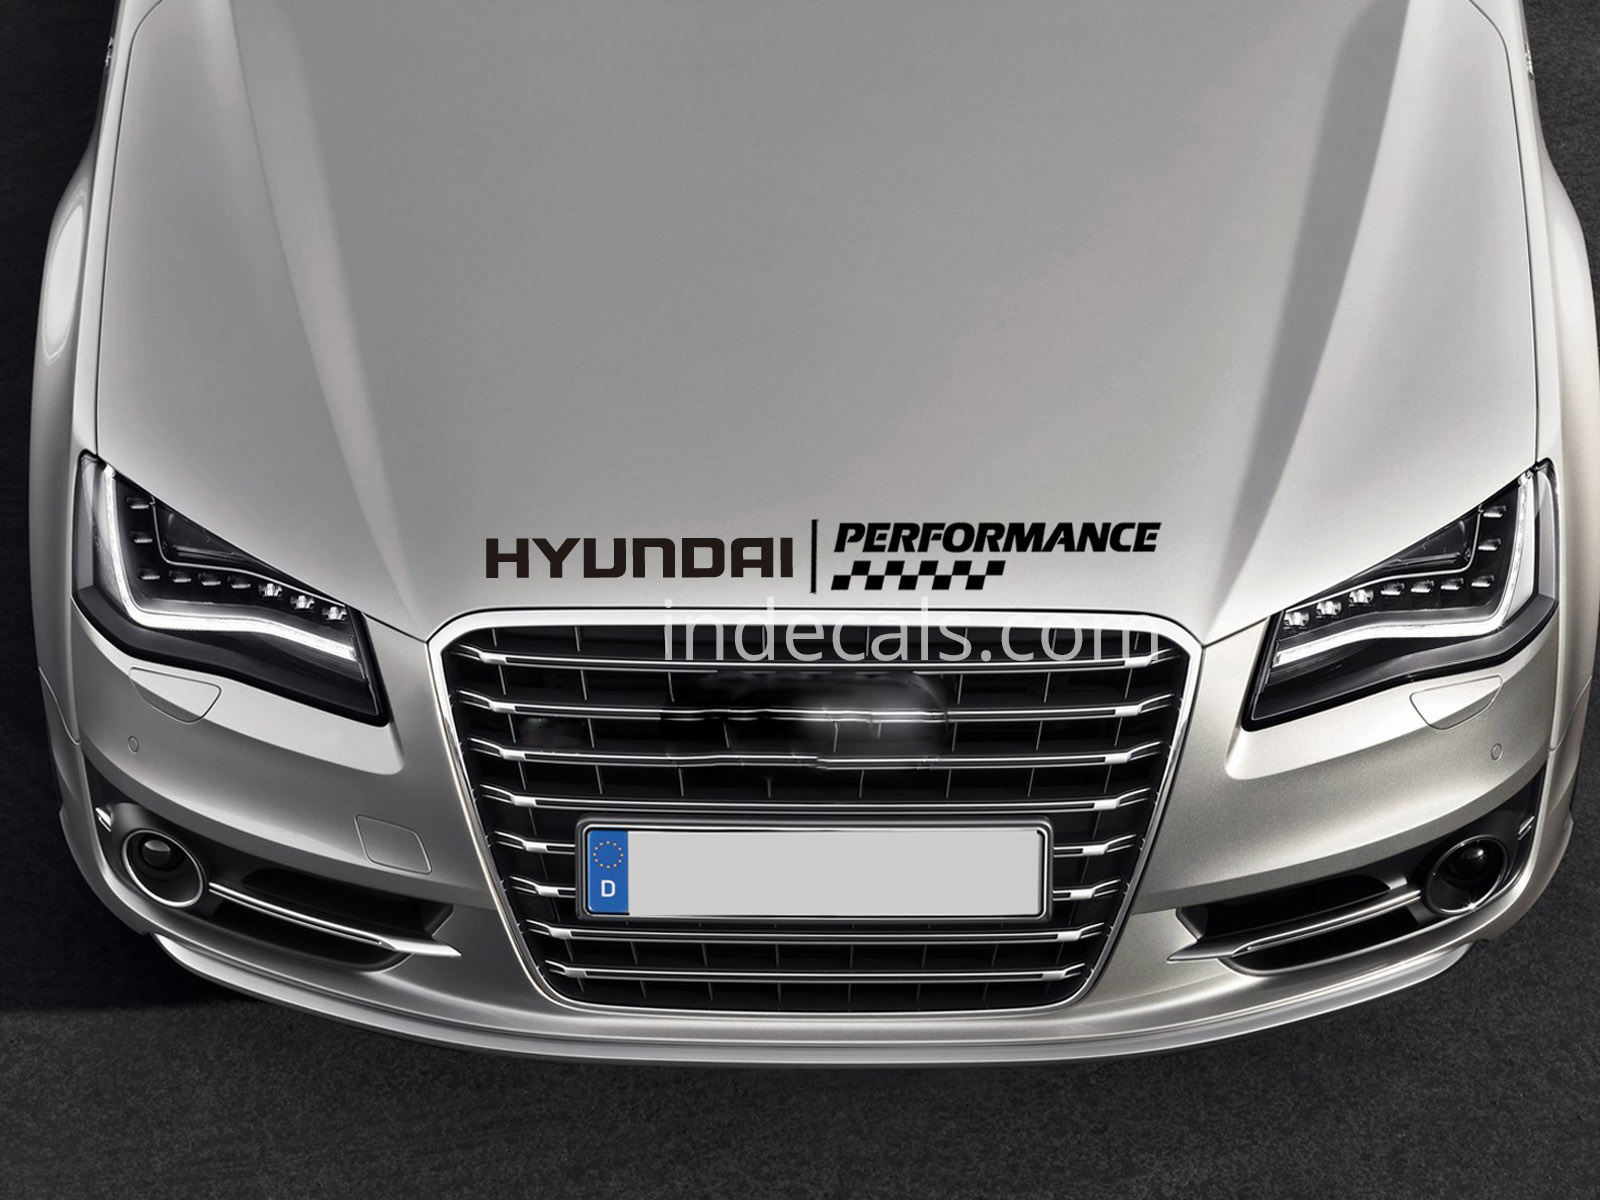 1 x Hyundai Performance Sticker for Bonnet - Black